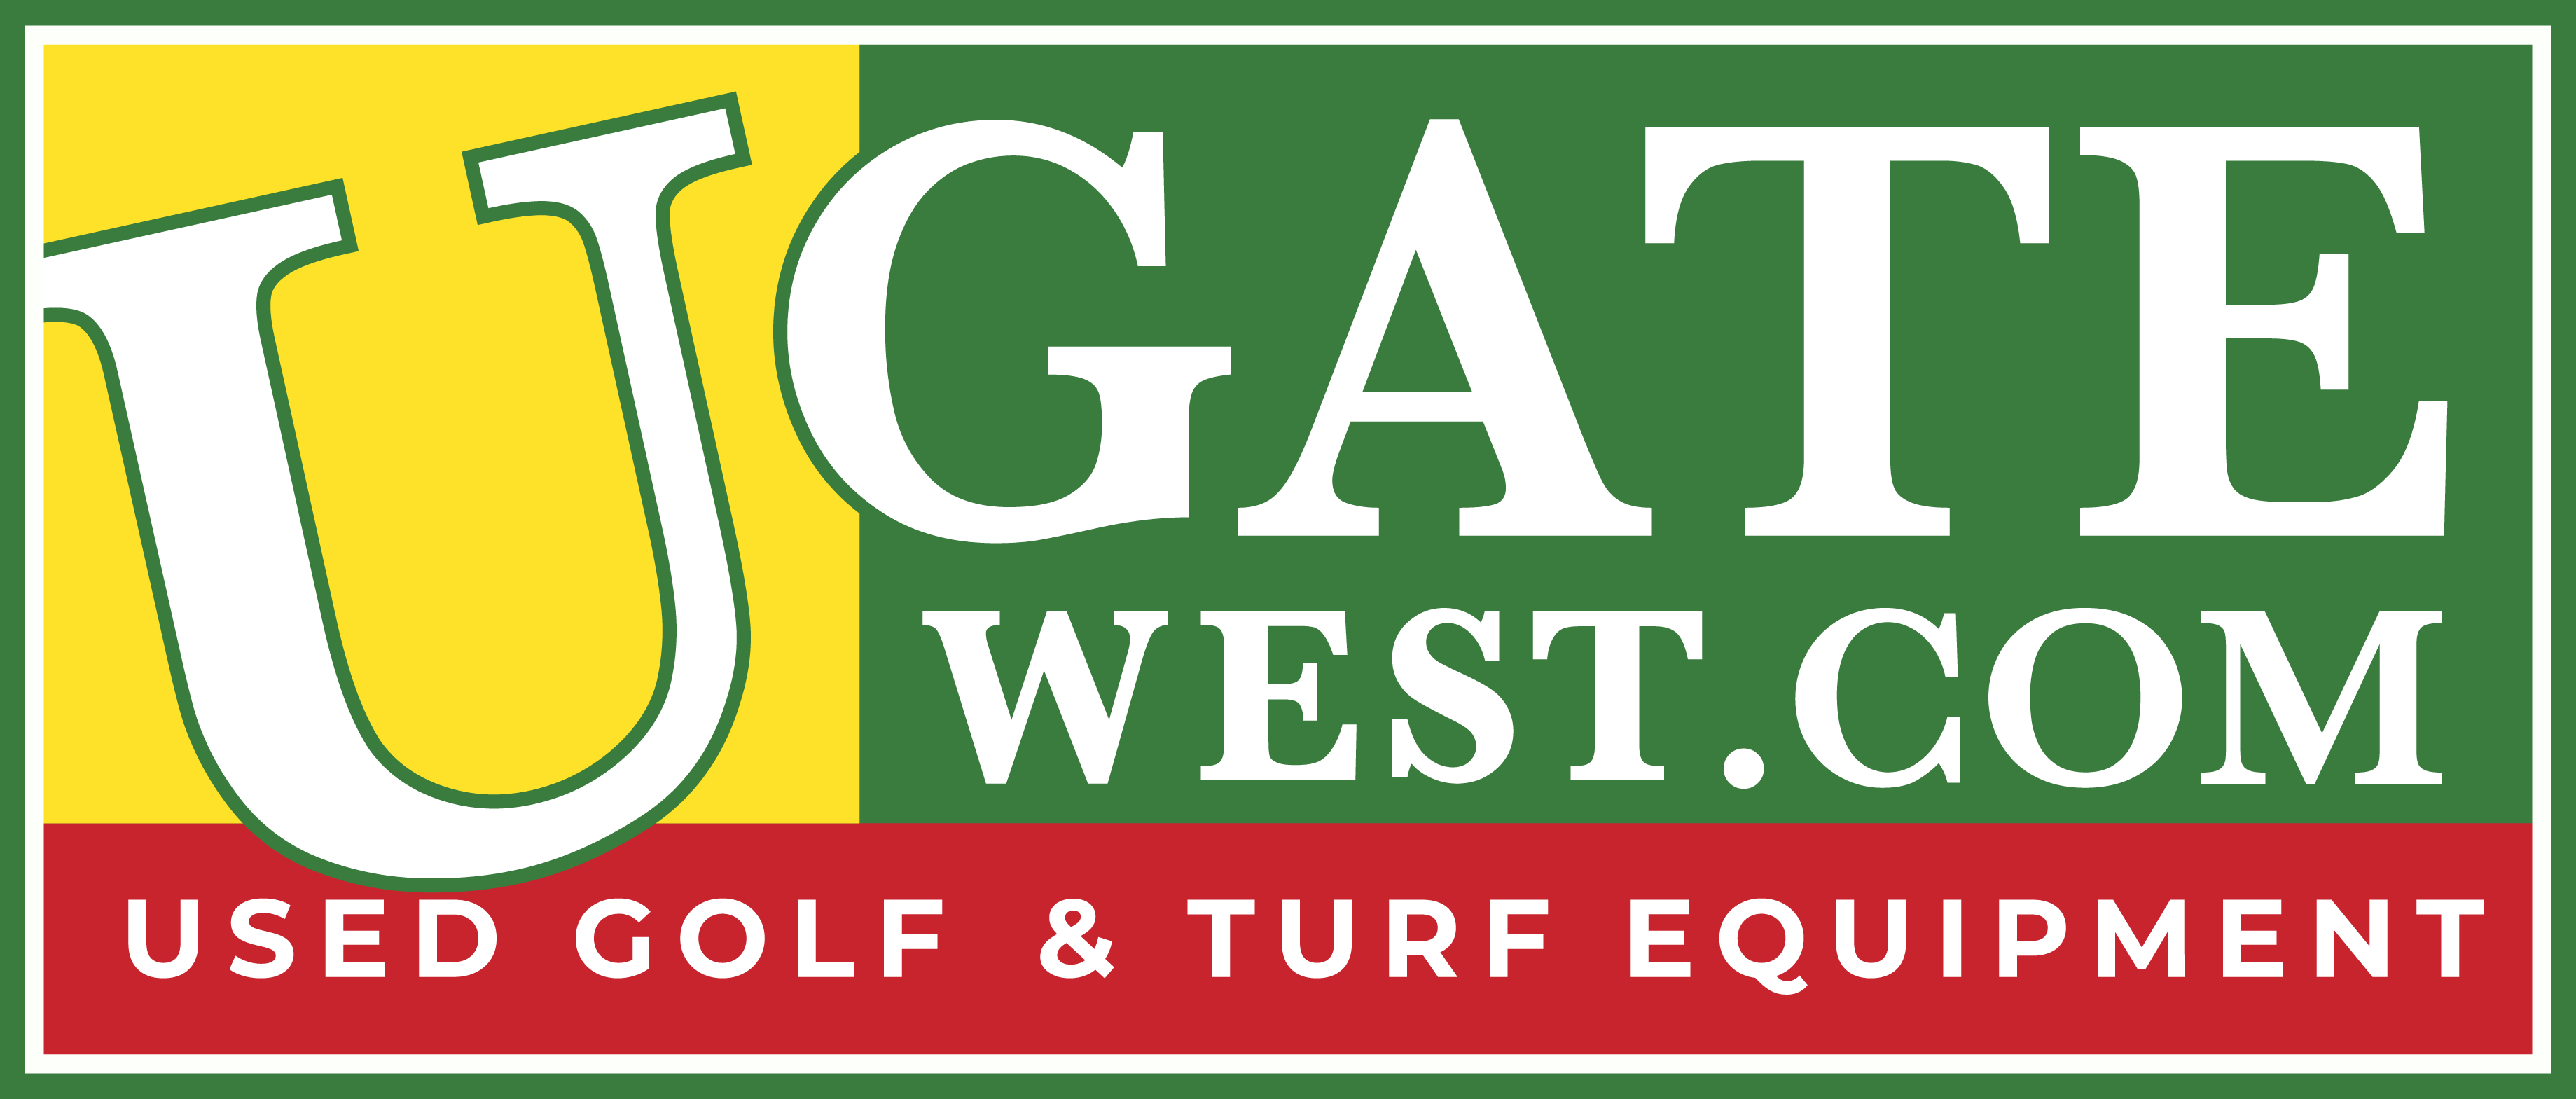 UGATE West | Used Golf & Turf Equipment